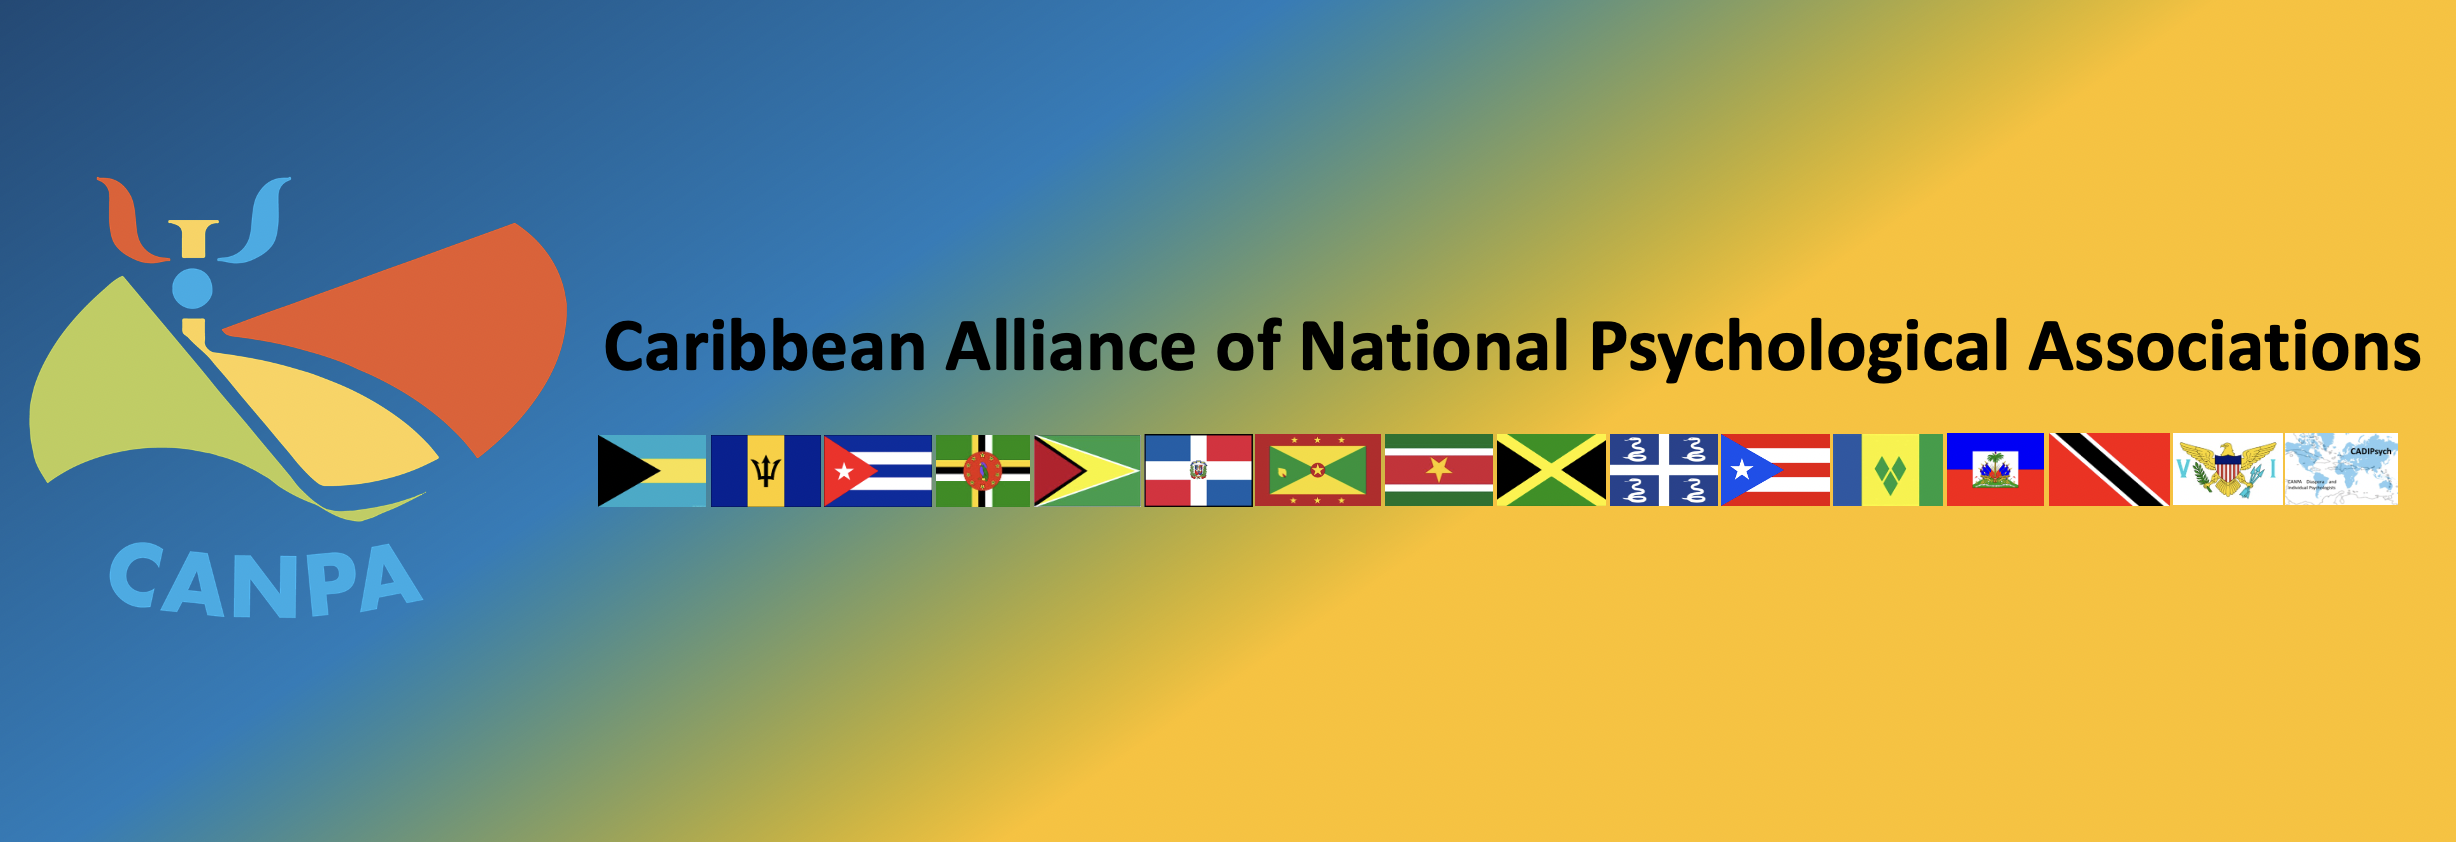 Caribbean Alliance of National Psychological Associations